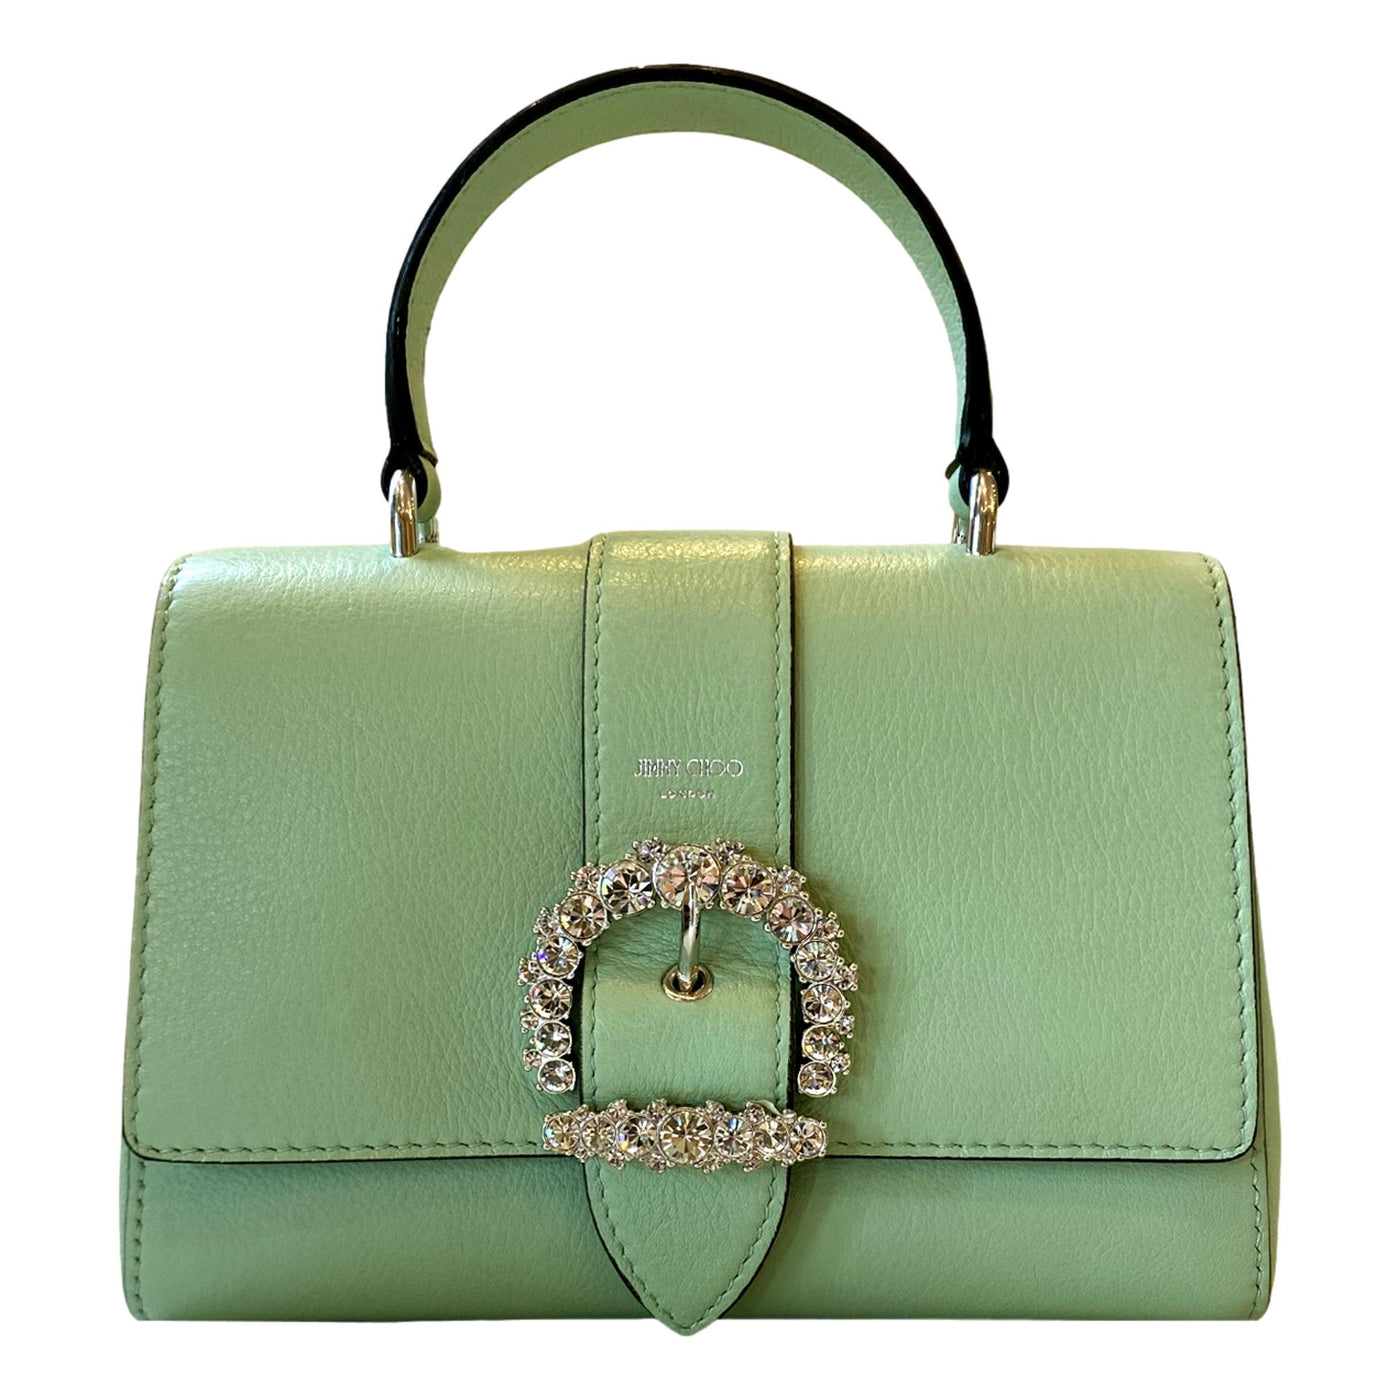 Jimmy Choo Cheri Mint Green Leather Top Handle Bag OSQM | 028 - LUXURYMRKT